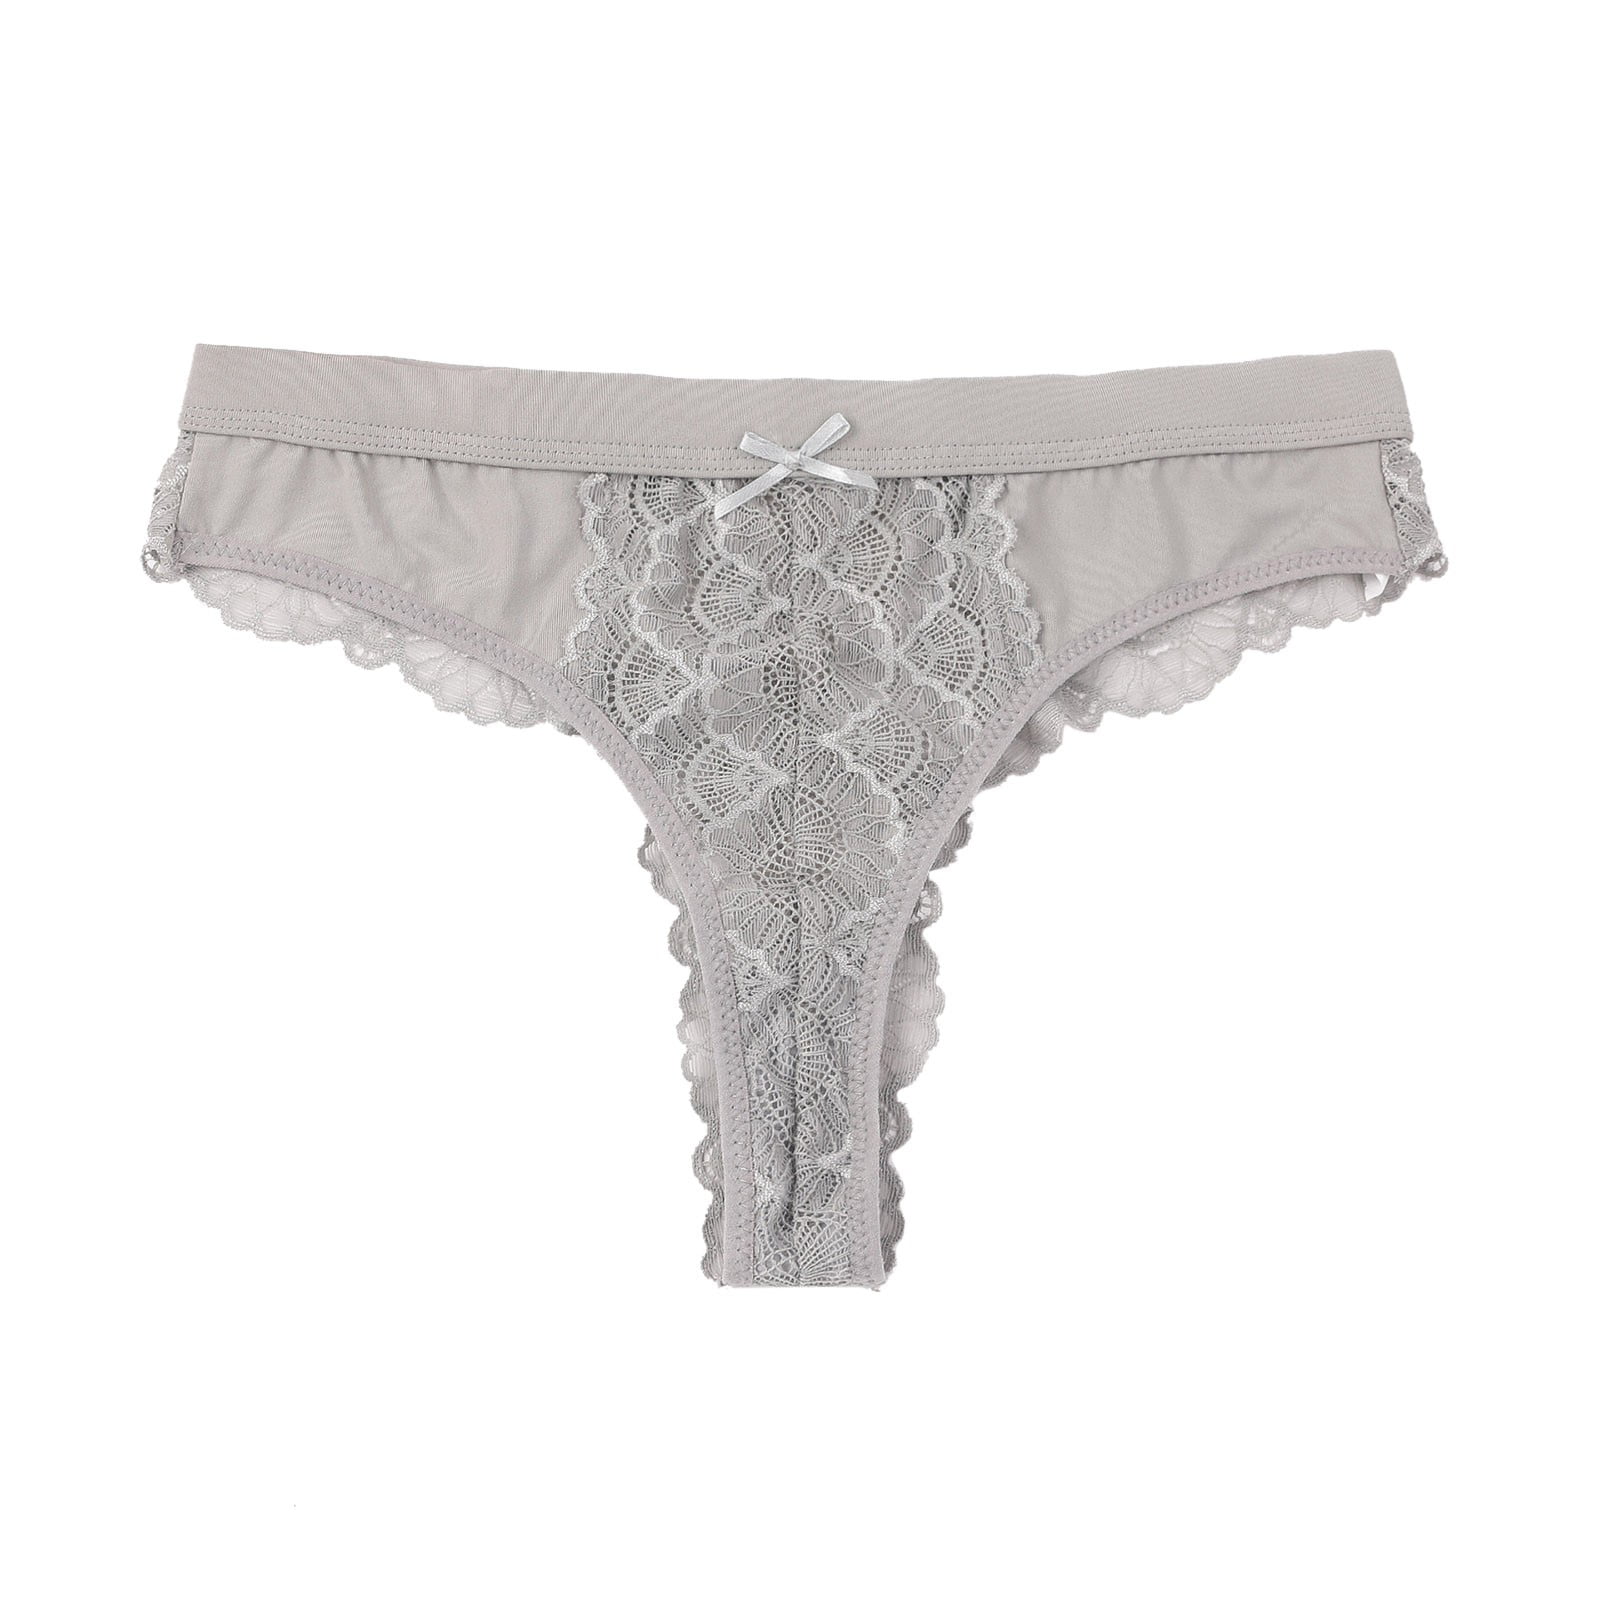 VOSS Women Crotchless Briefs Lingerie Knickers Panties Underwear